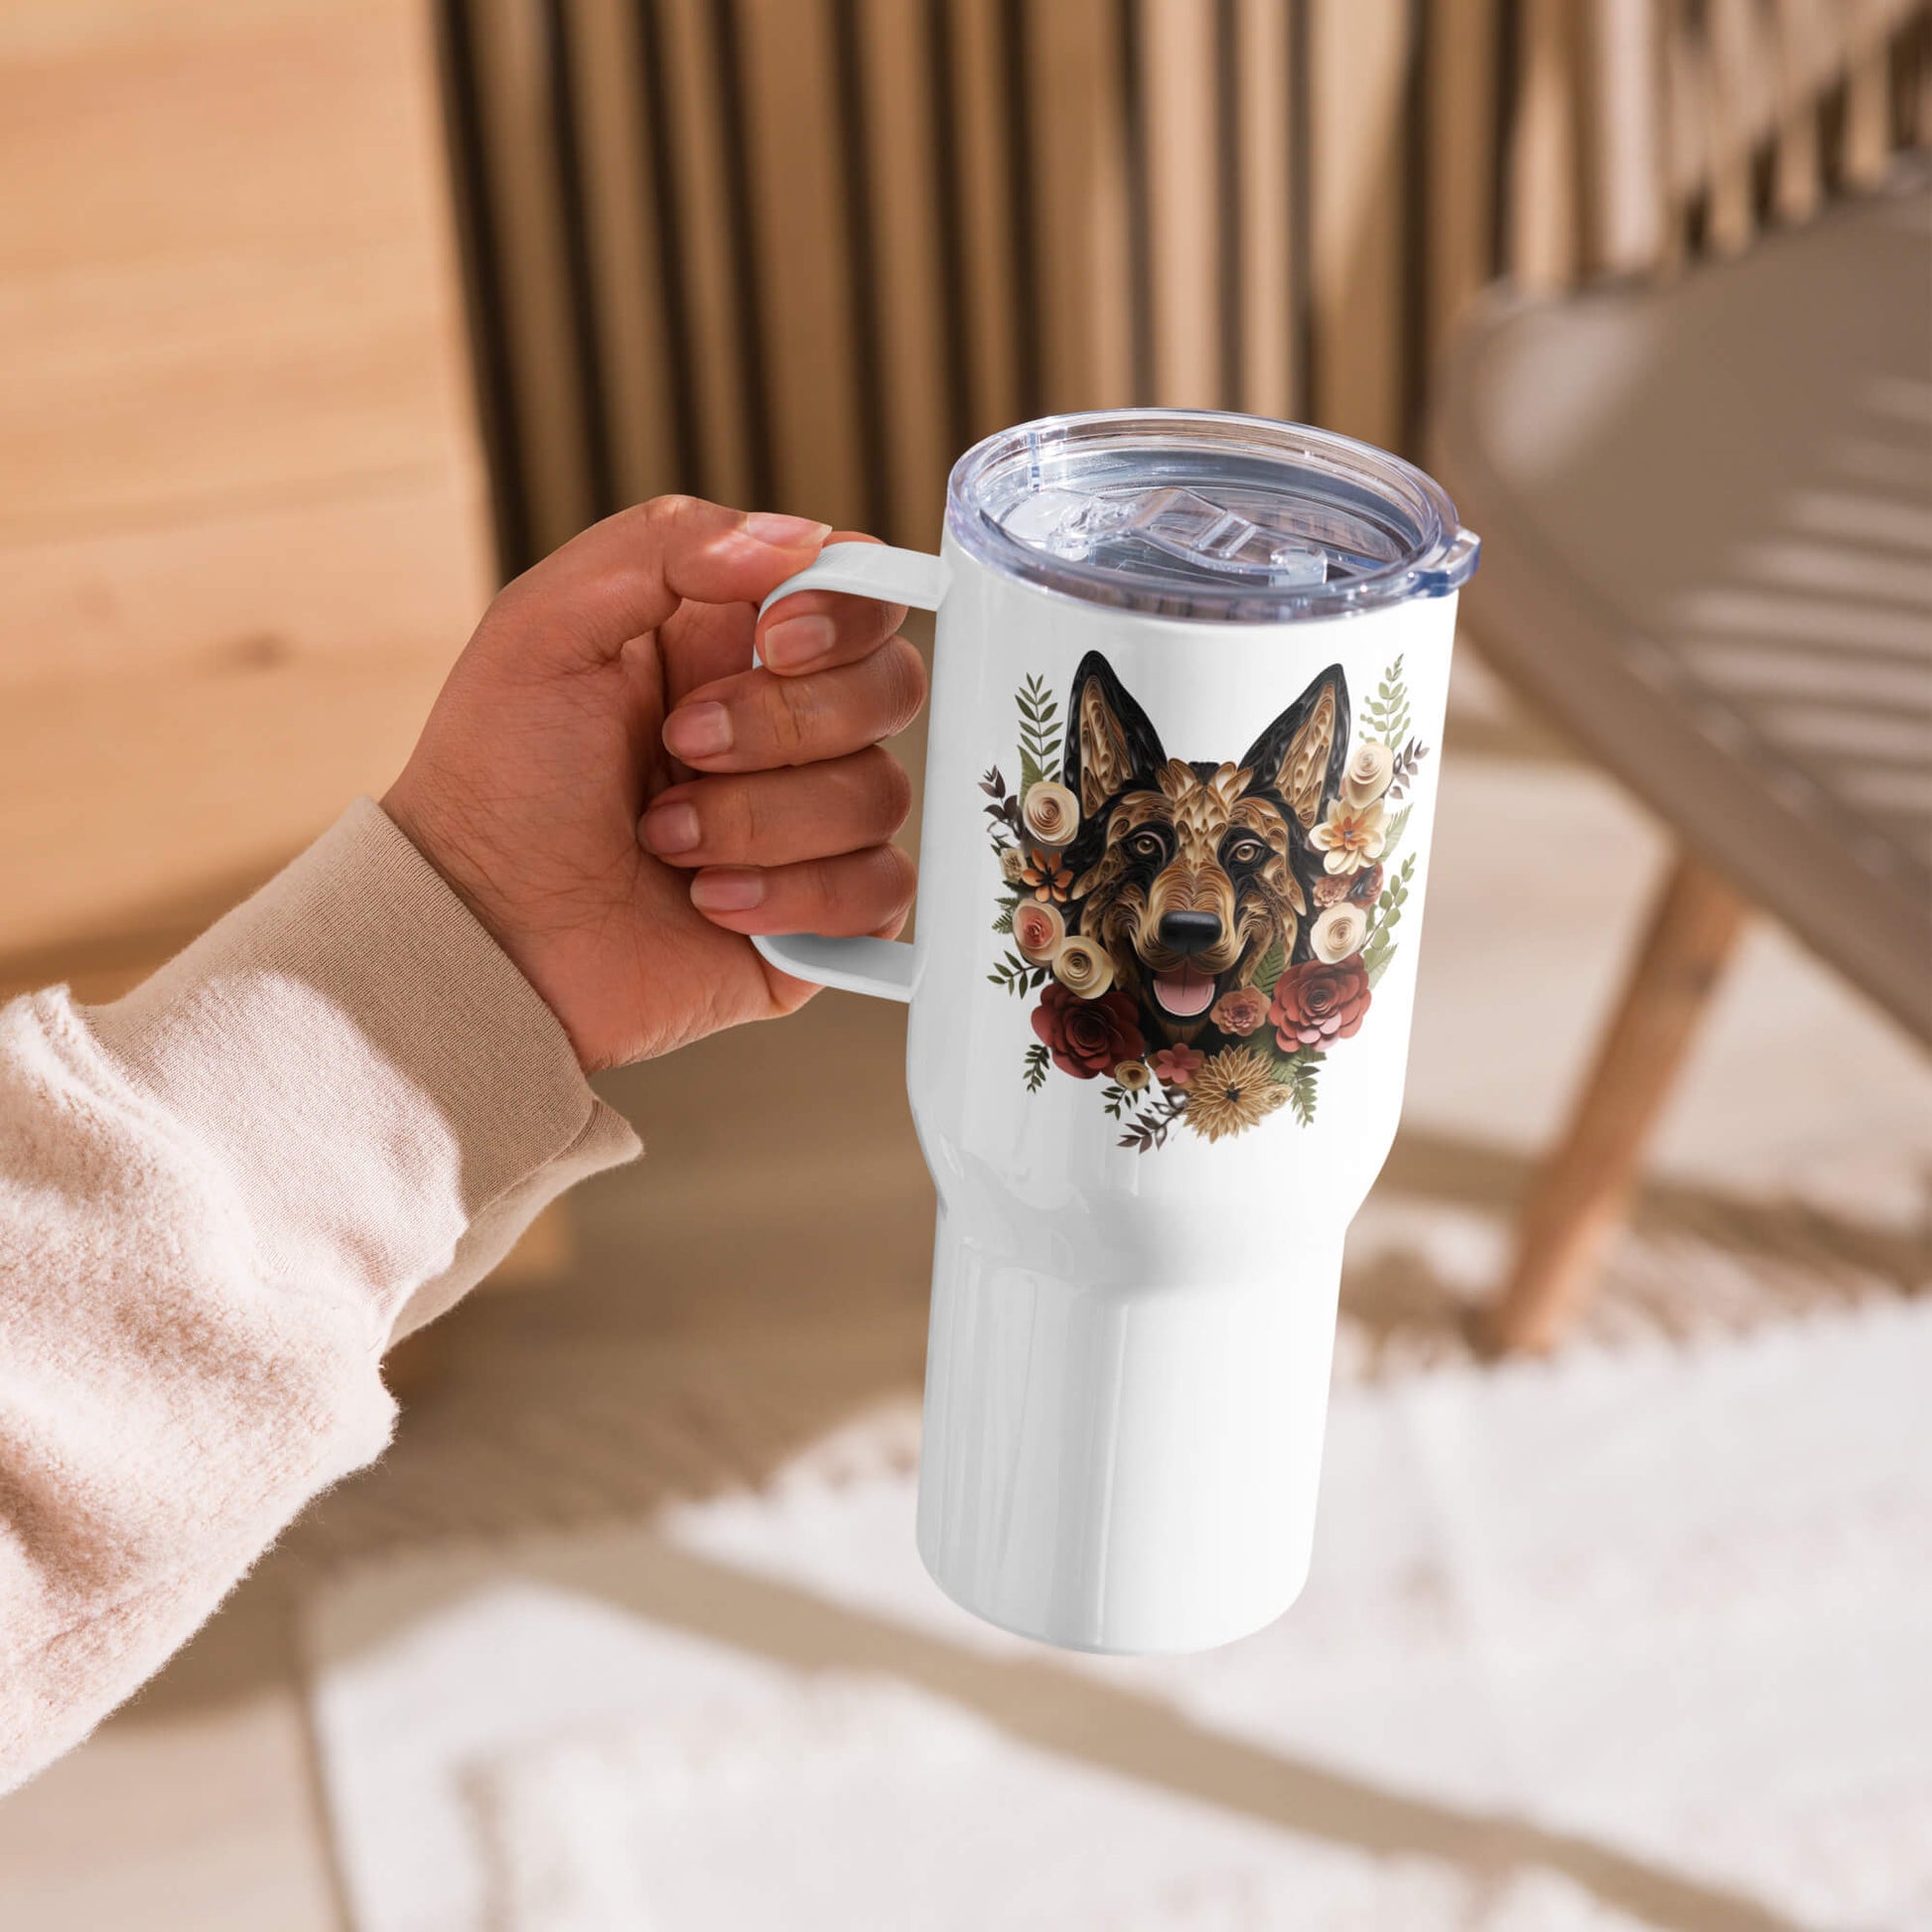 25oz Travel Mug with a Handle - German Shepherd Paper Quilling Design - Hobbster